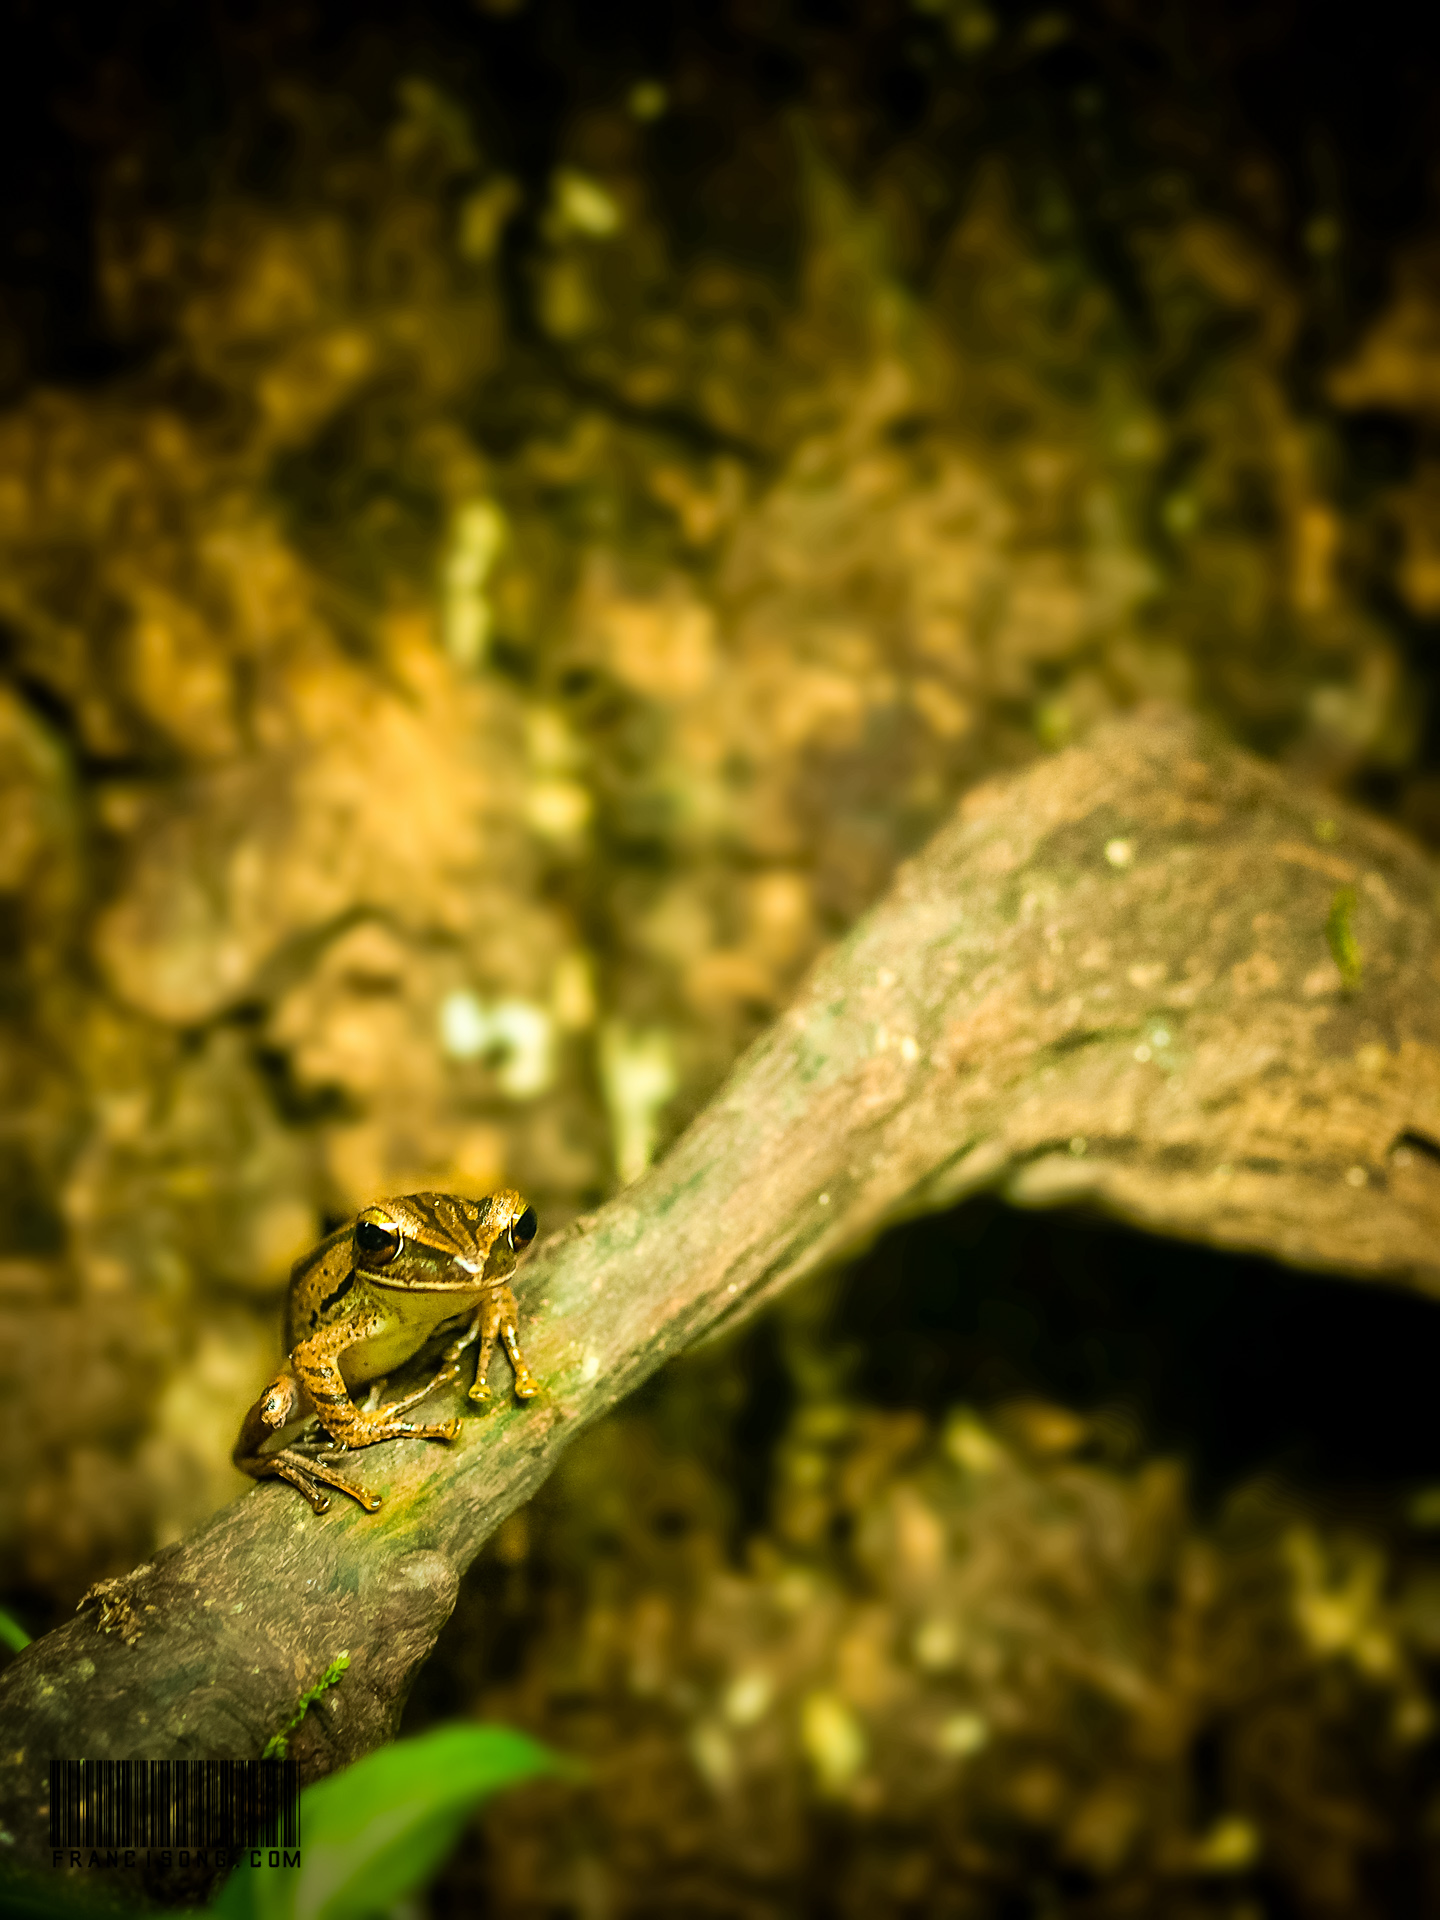 Frog resting on tree branch